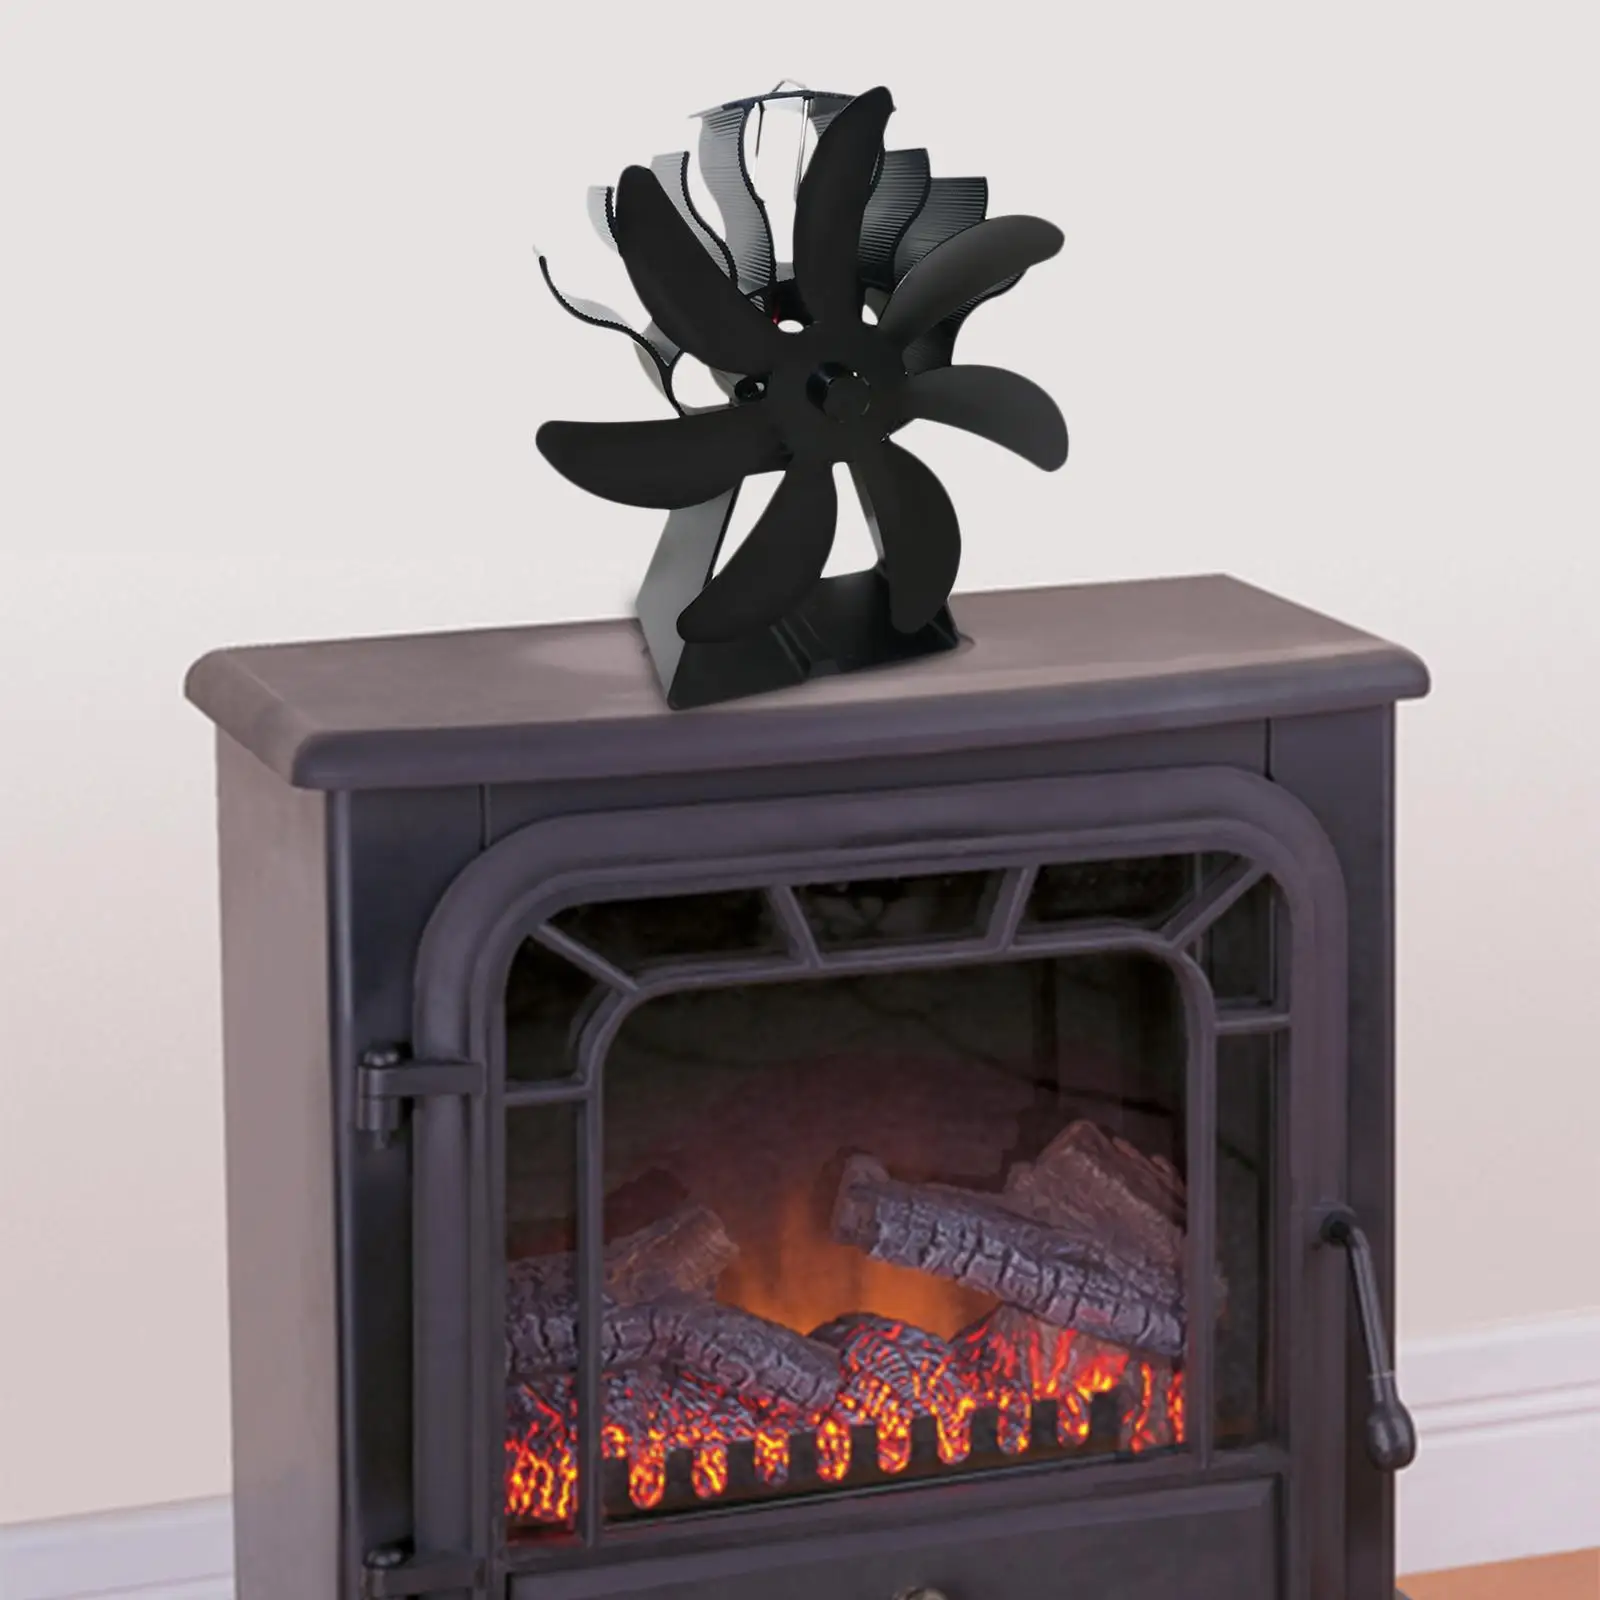 Fireplace Fan Silent Efficient Transfer Log Burnering Household Circulates Warm Powered Top Fan